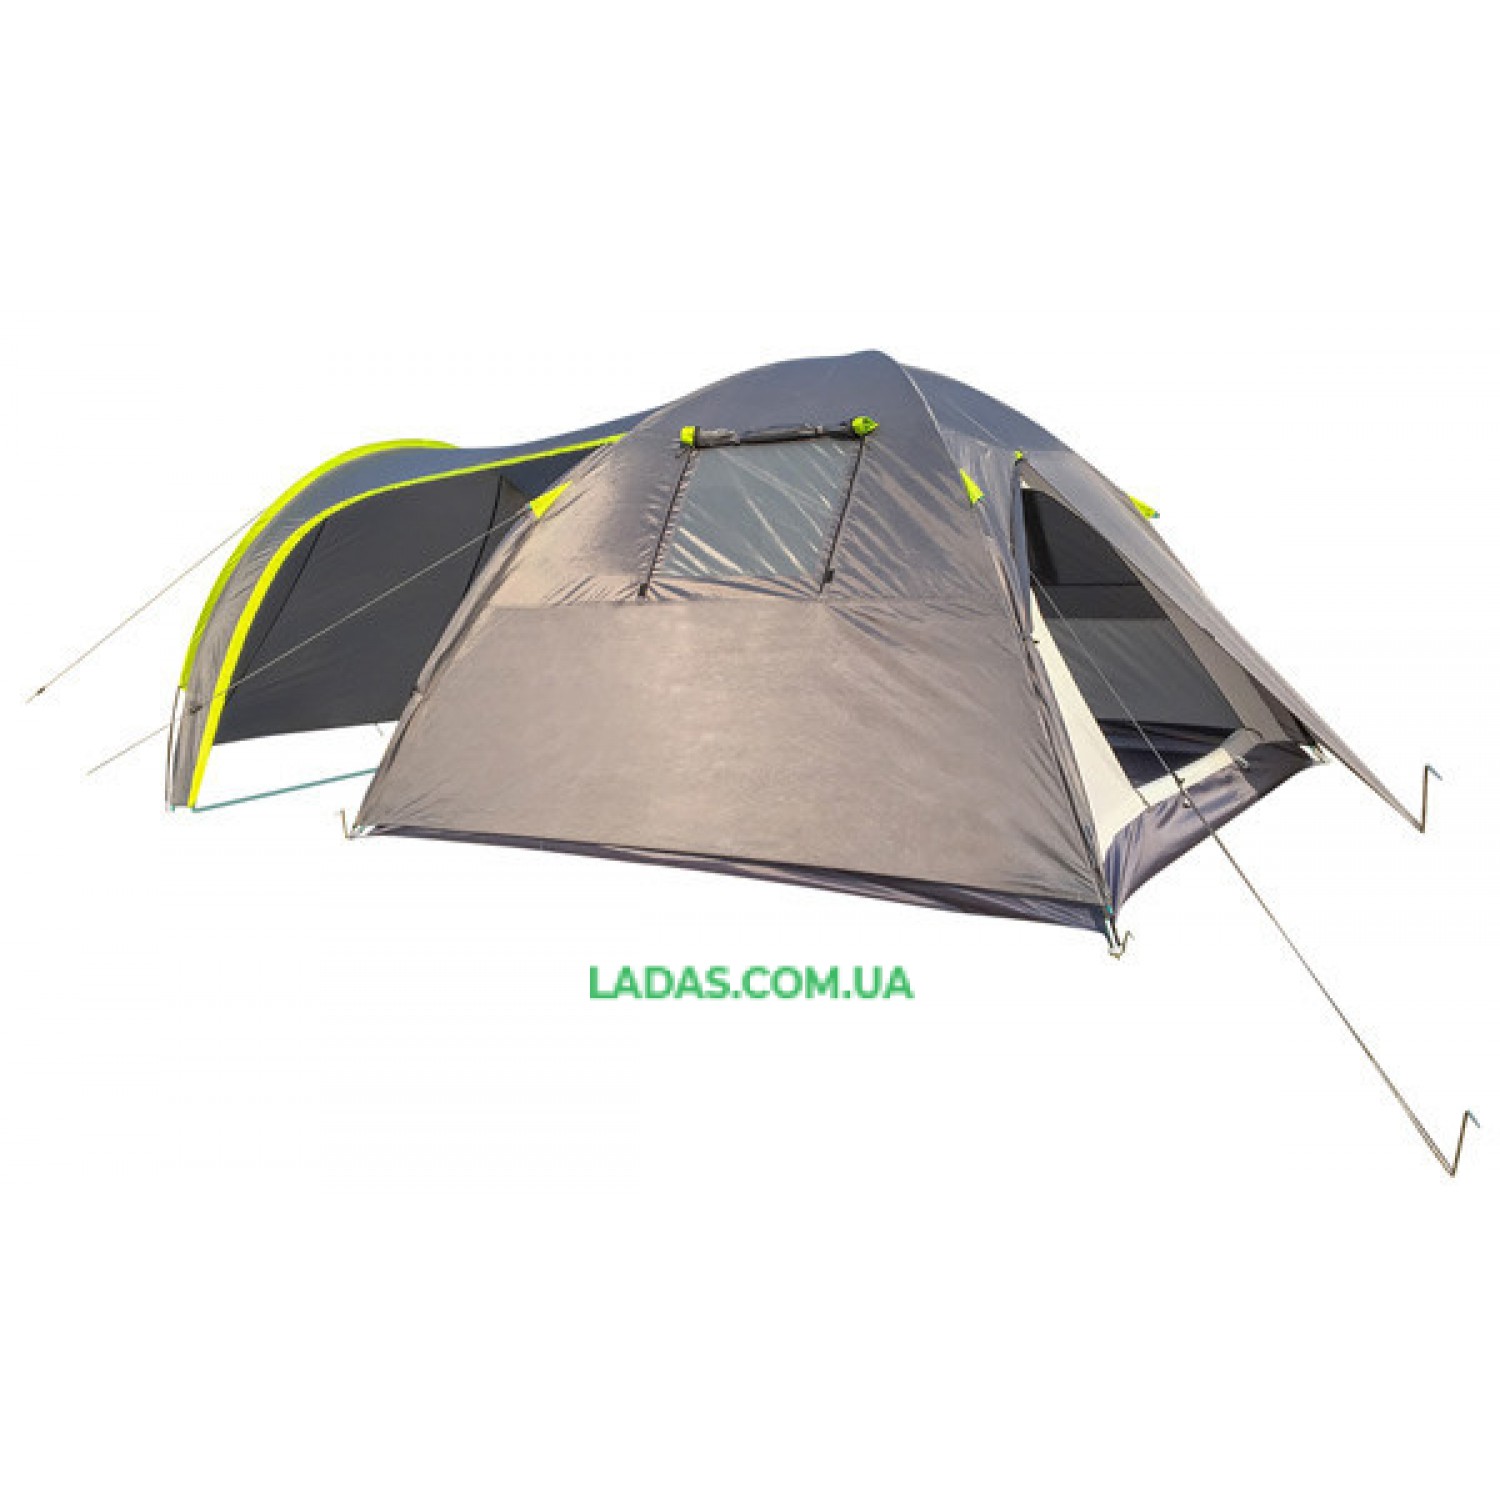 Палатка четырехместная Green Camp 1009-2 (2 входа)